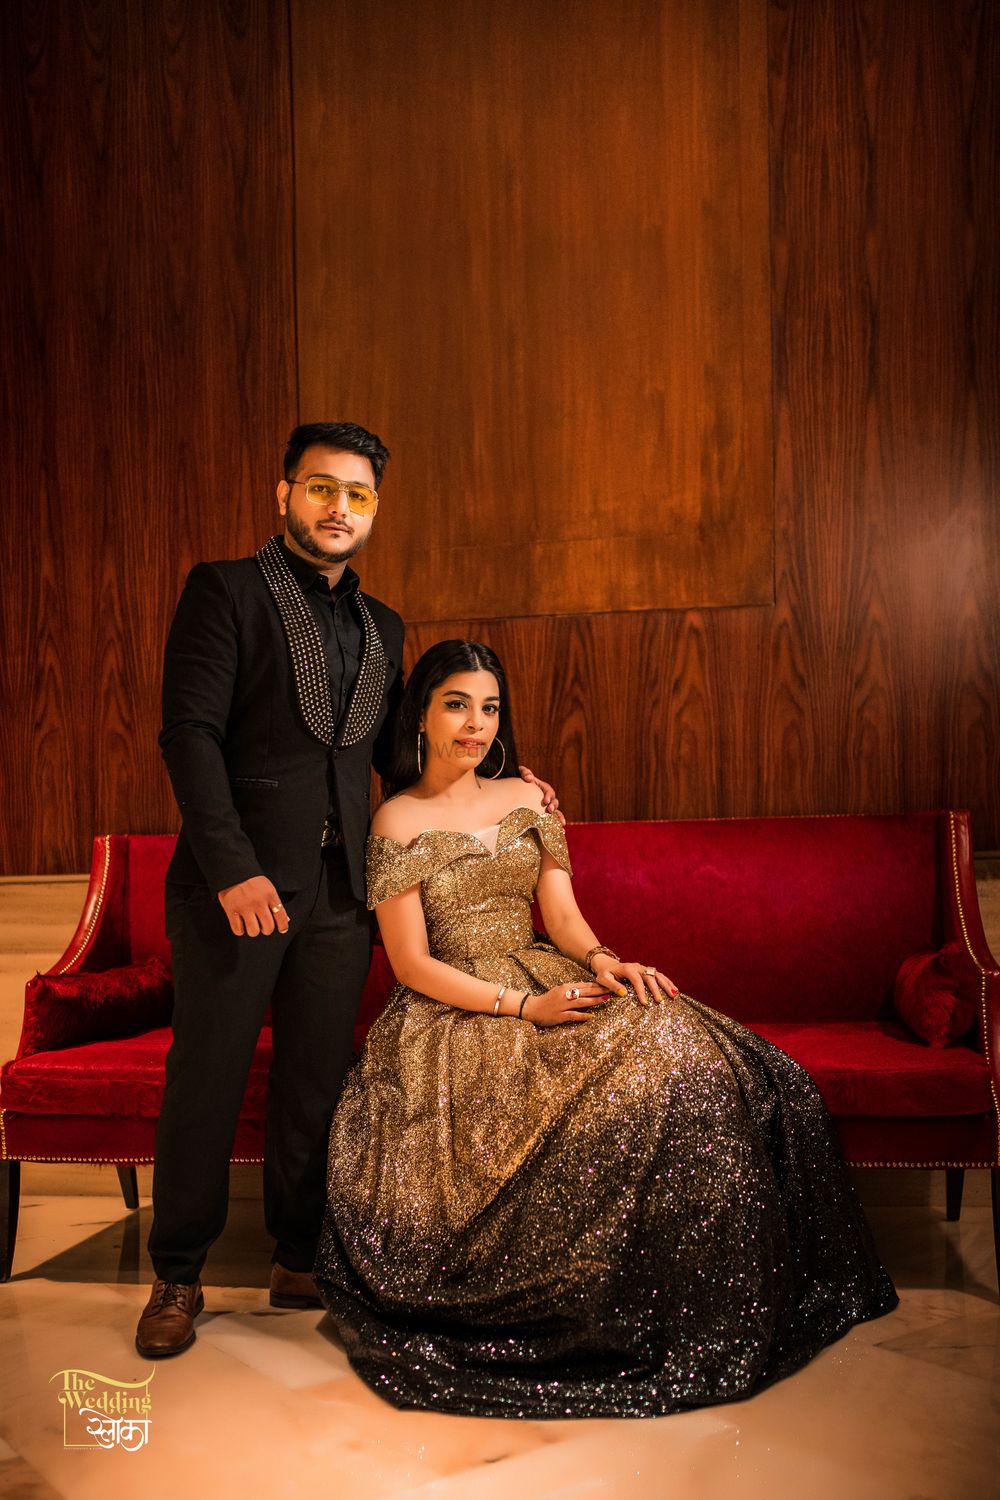 Photo From Nikhil + Ridhima || Pre Wedding  - By The Wedding Sloka